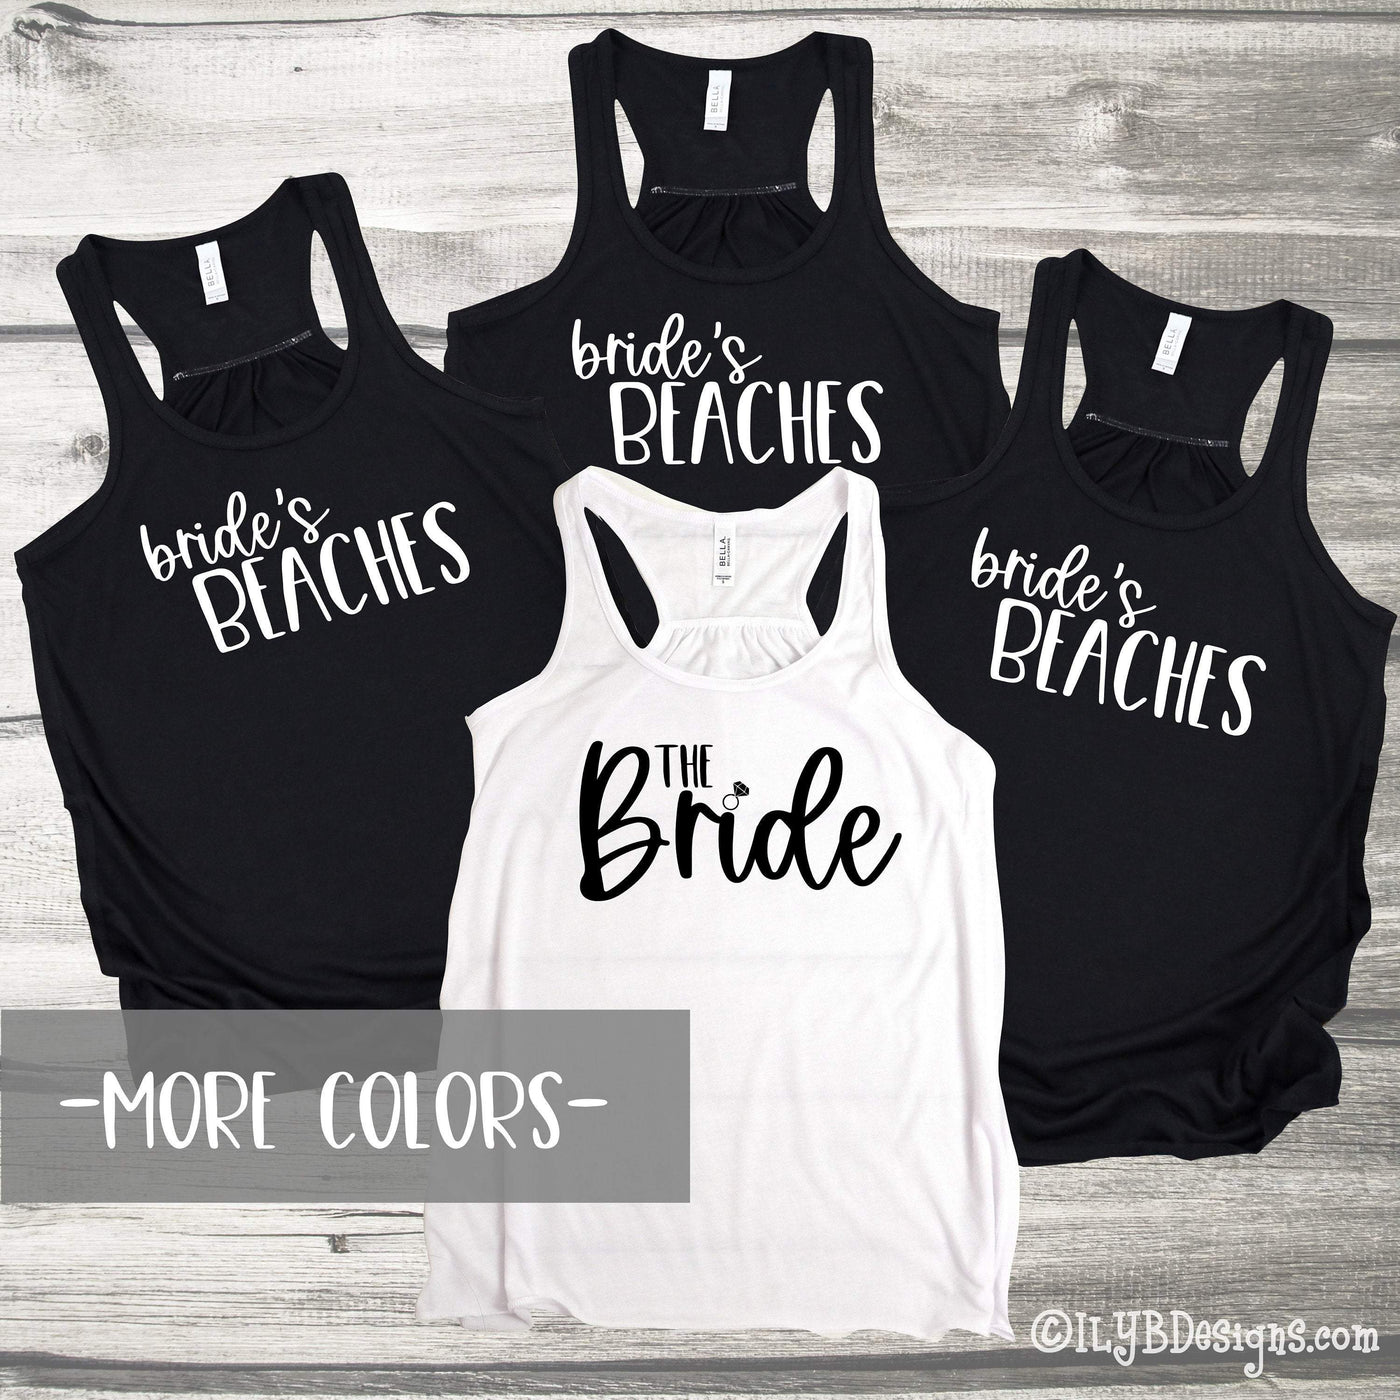 Beach Bachelorette Party Tank Tops | The Bride & Bride's Beaches